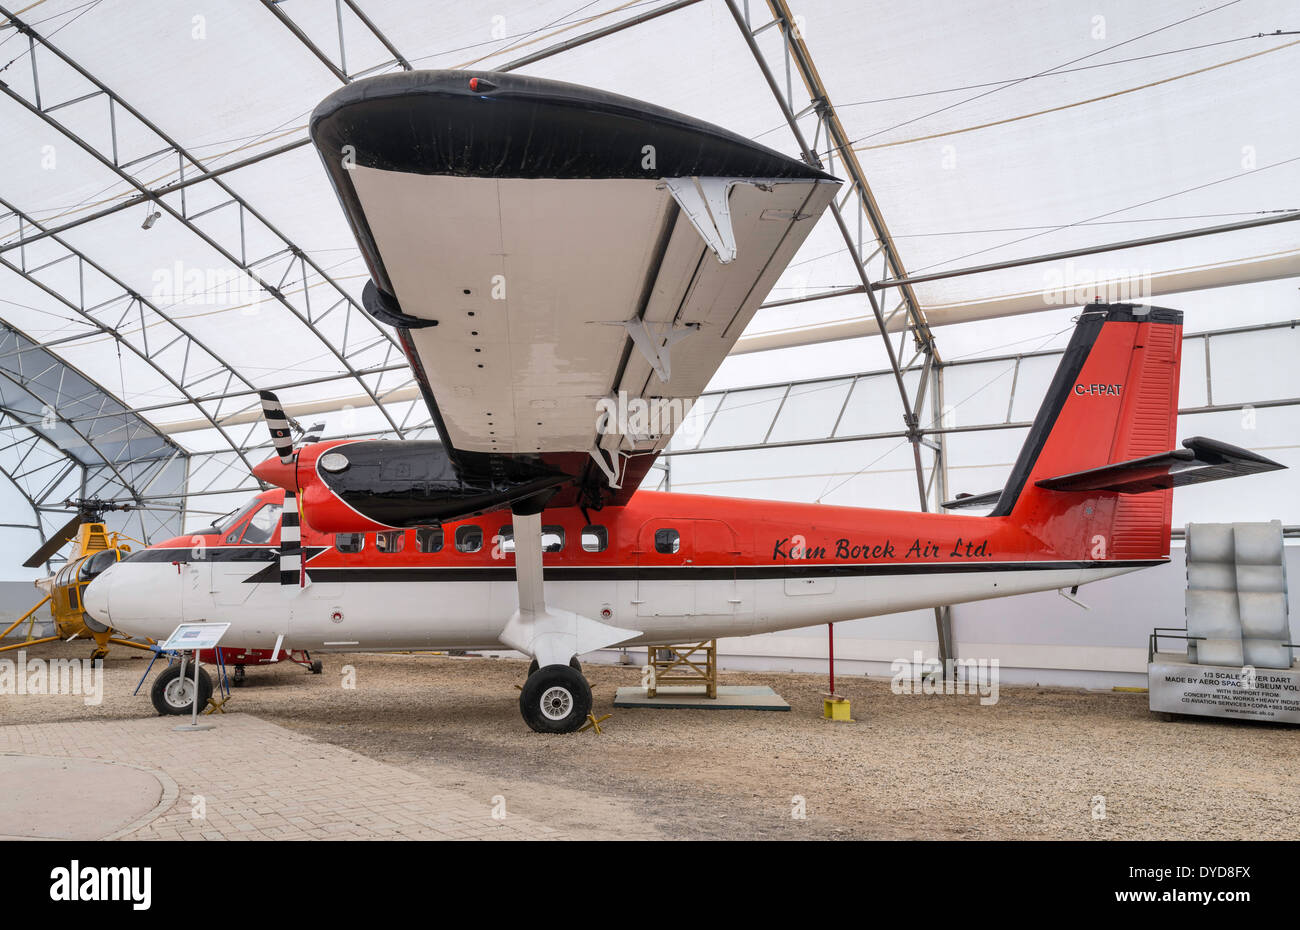 de Havilland Canada DHC-6 Twin Otter utility aircraft, Tent Hangar at Aero Space Museum, Calgary, Alberta, Canada Stock Photo